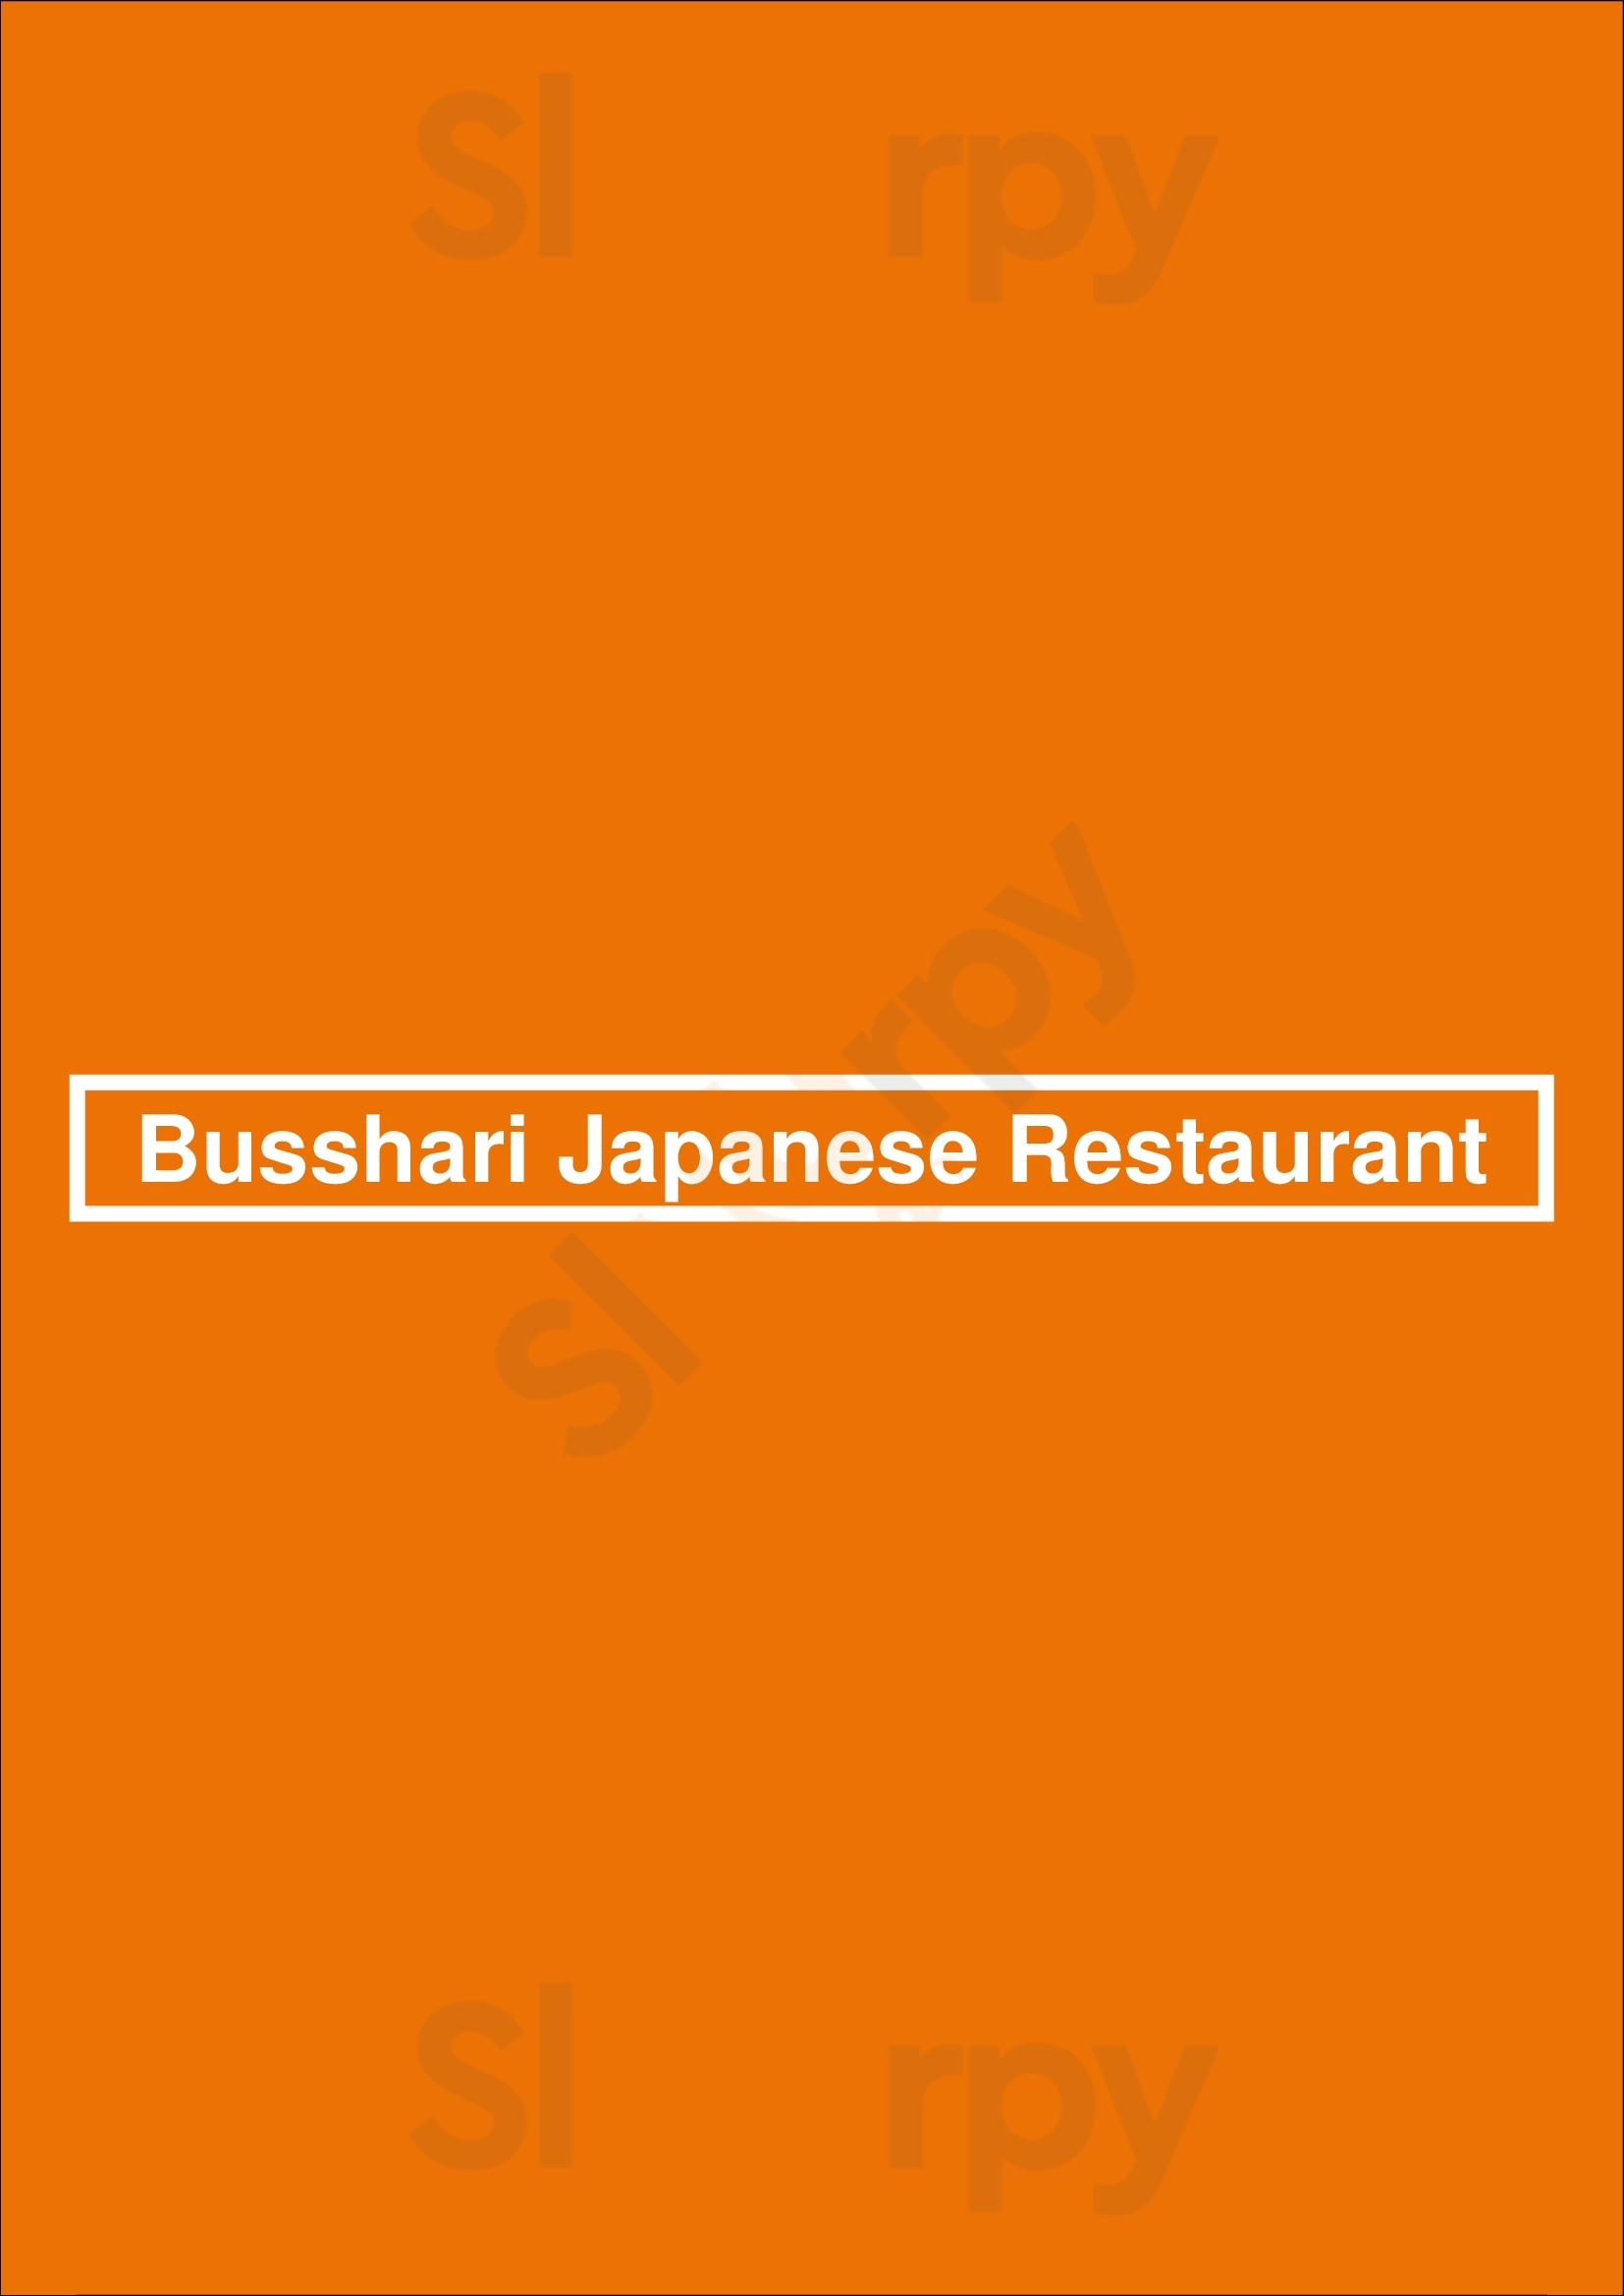 Busshari Japanese Restaurant Sydney Menu - 1